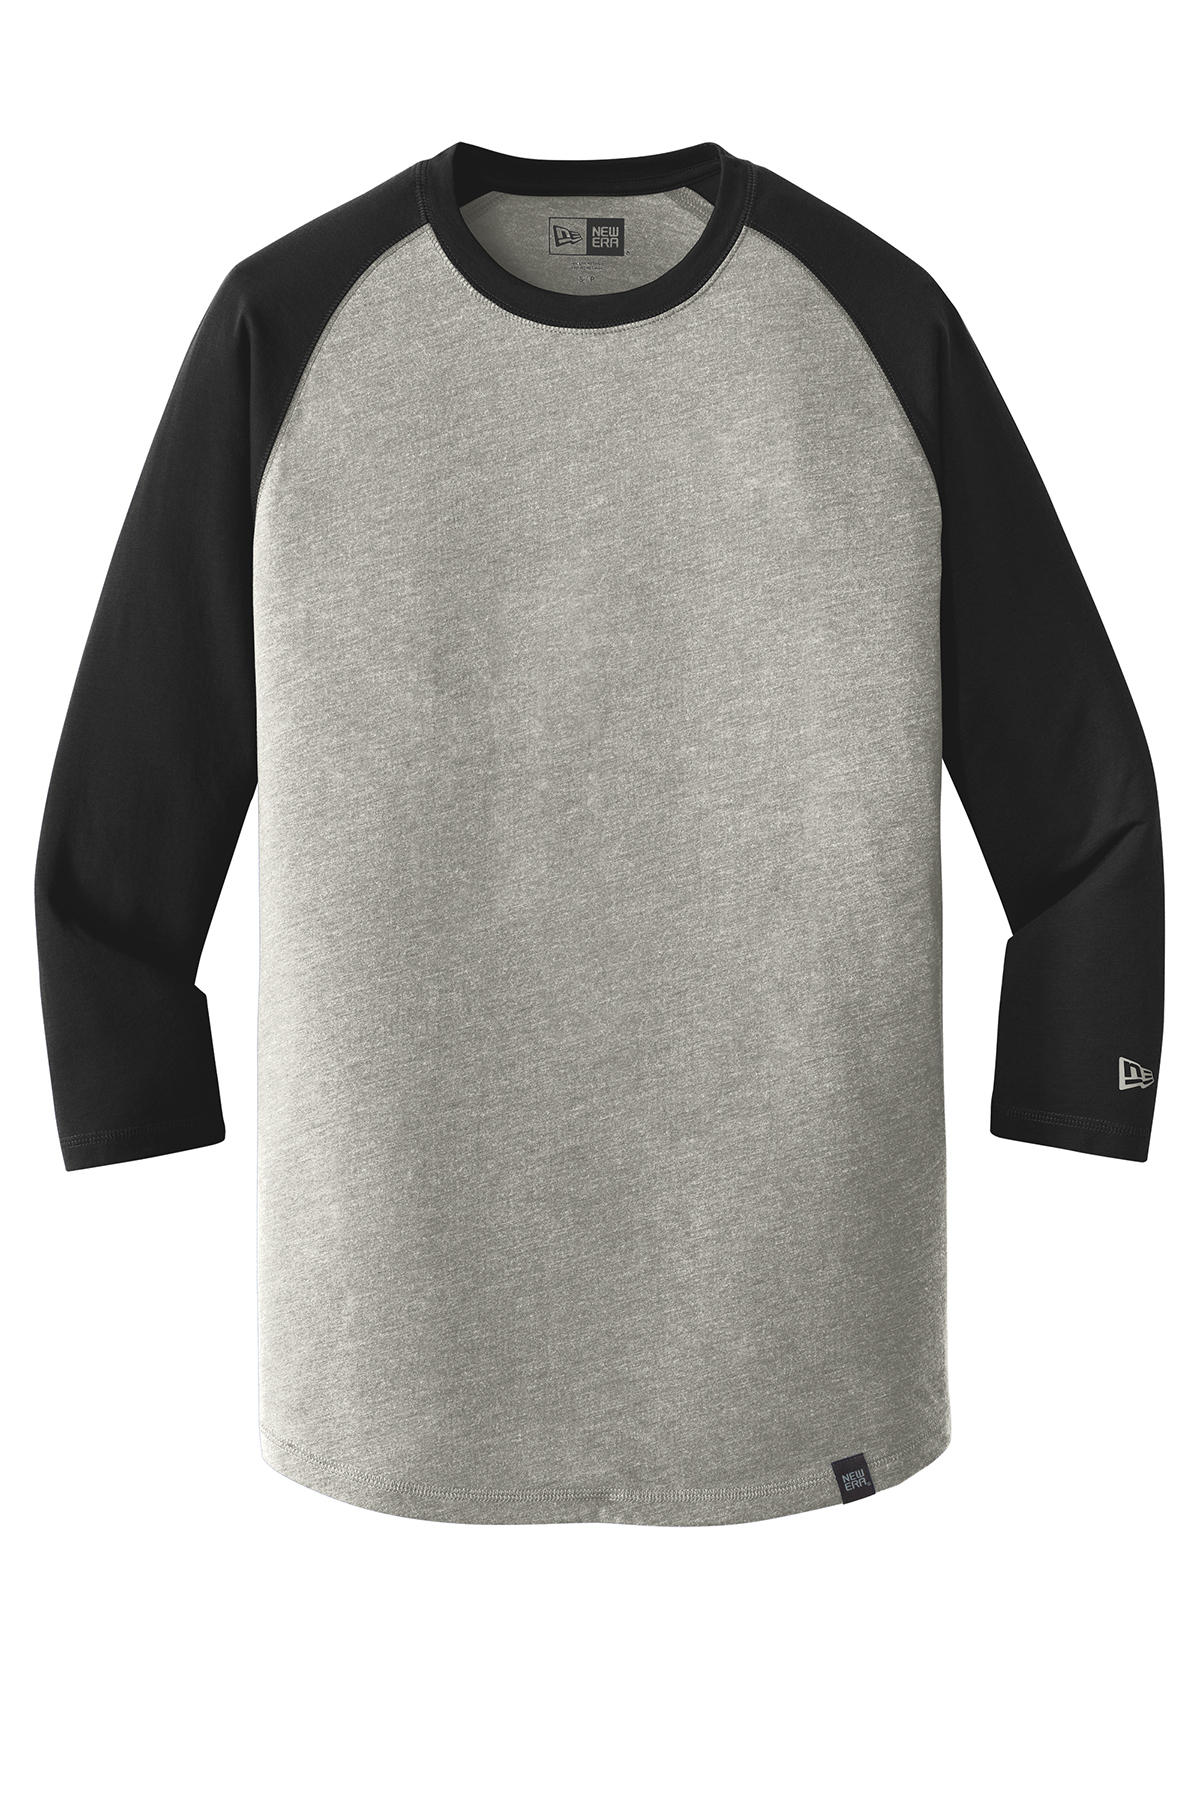 Husqvarna Navy Grey Baseball XL Shirt 3/4 Sleeve Black Crown H Established 1689 